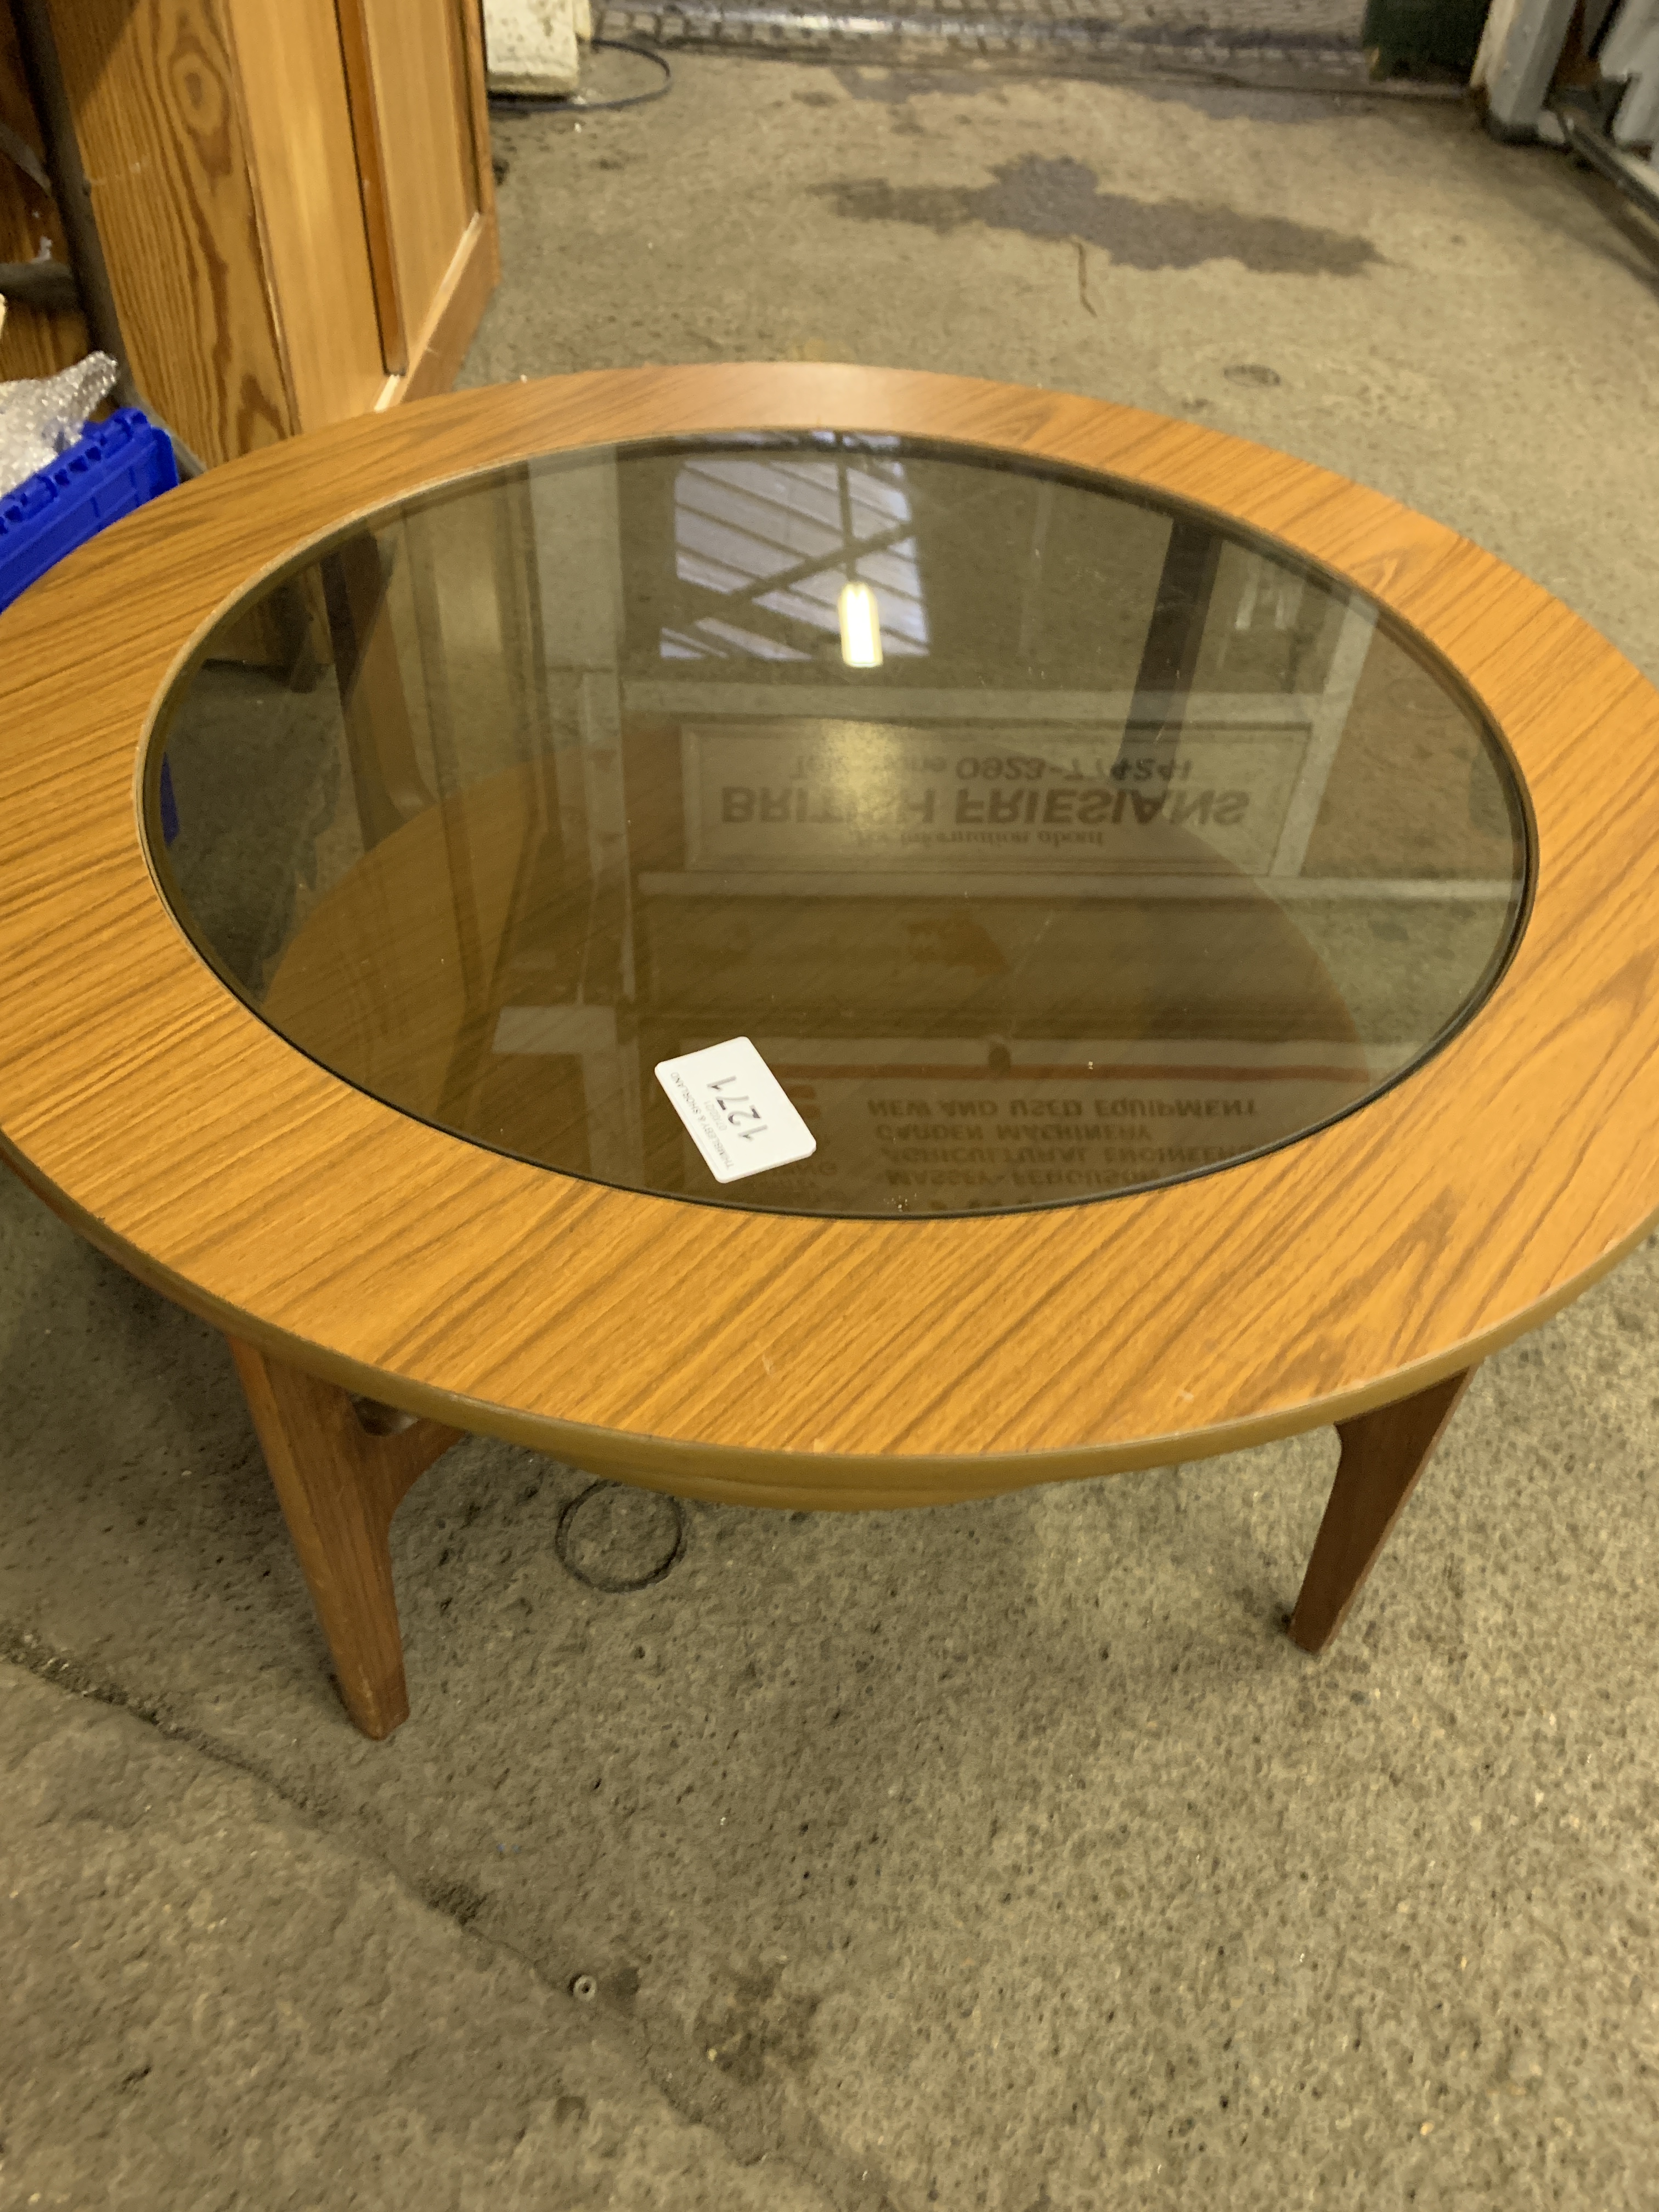 Retro style circular coffee table